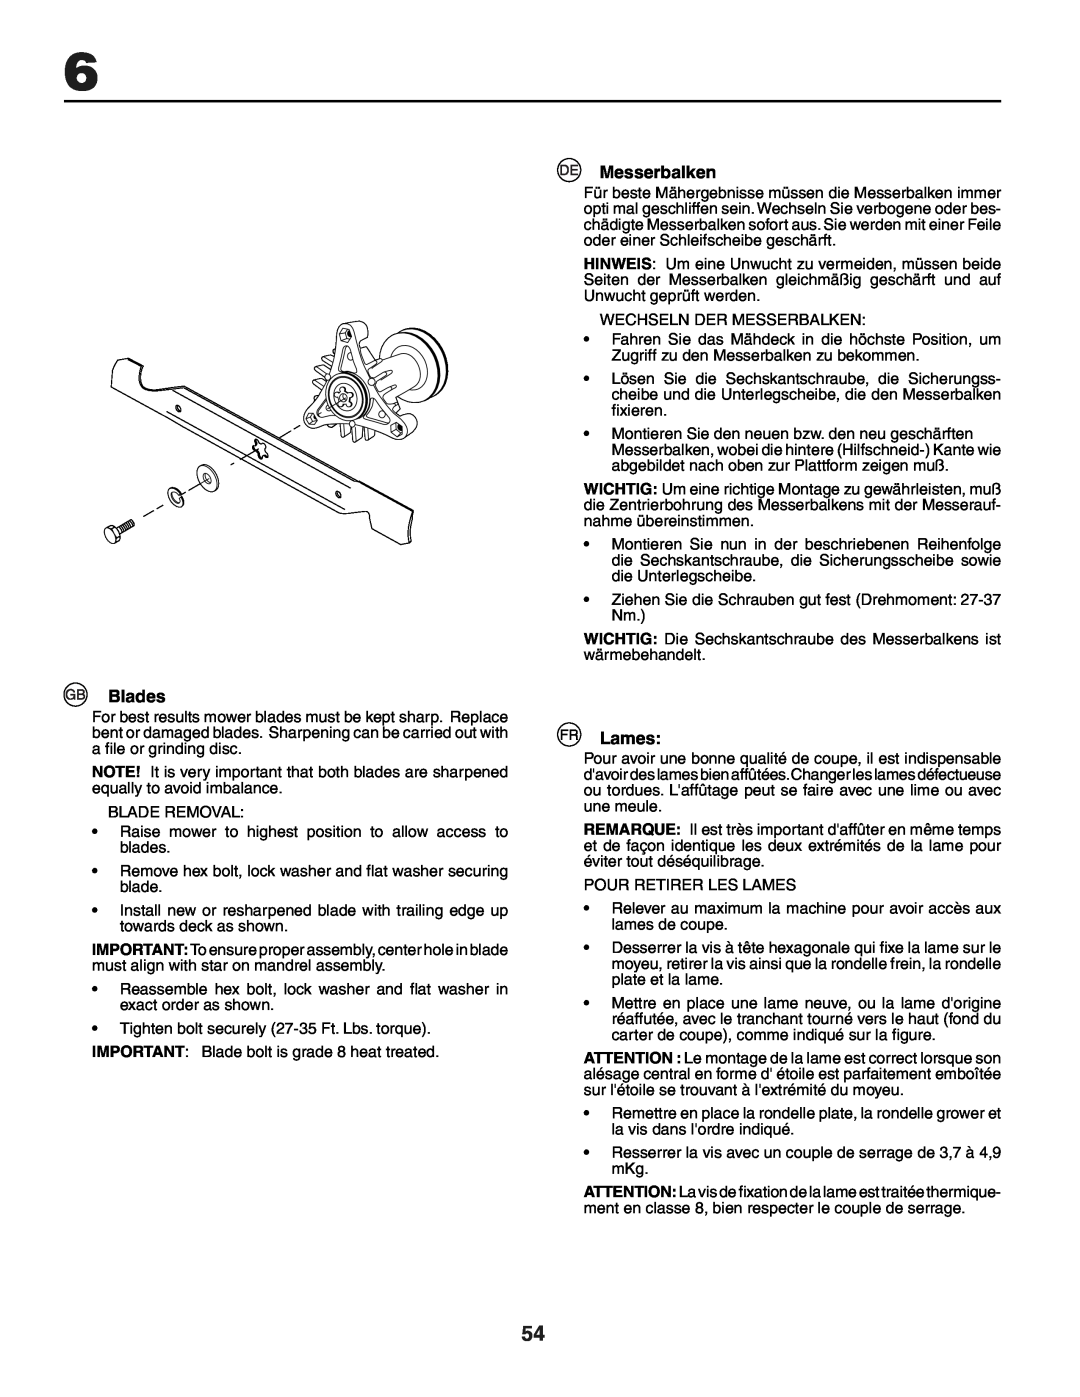 Husqvarna YTH150XP instruction manual Blades, Messerbalken, Lames 